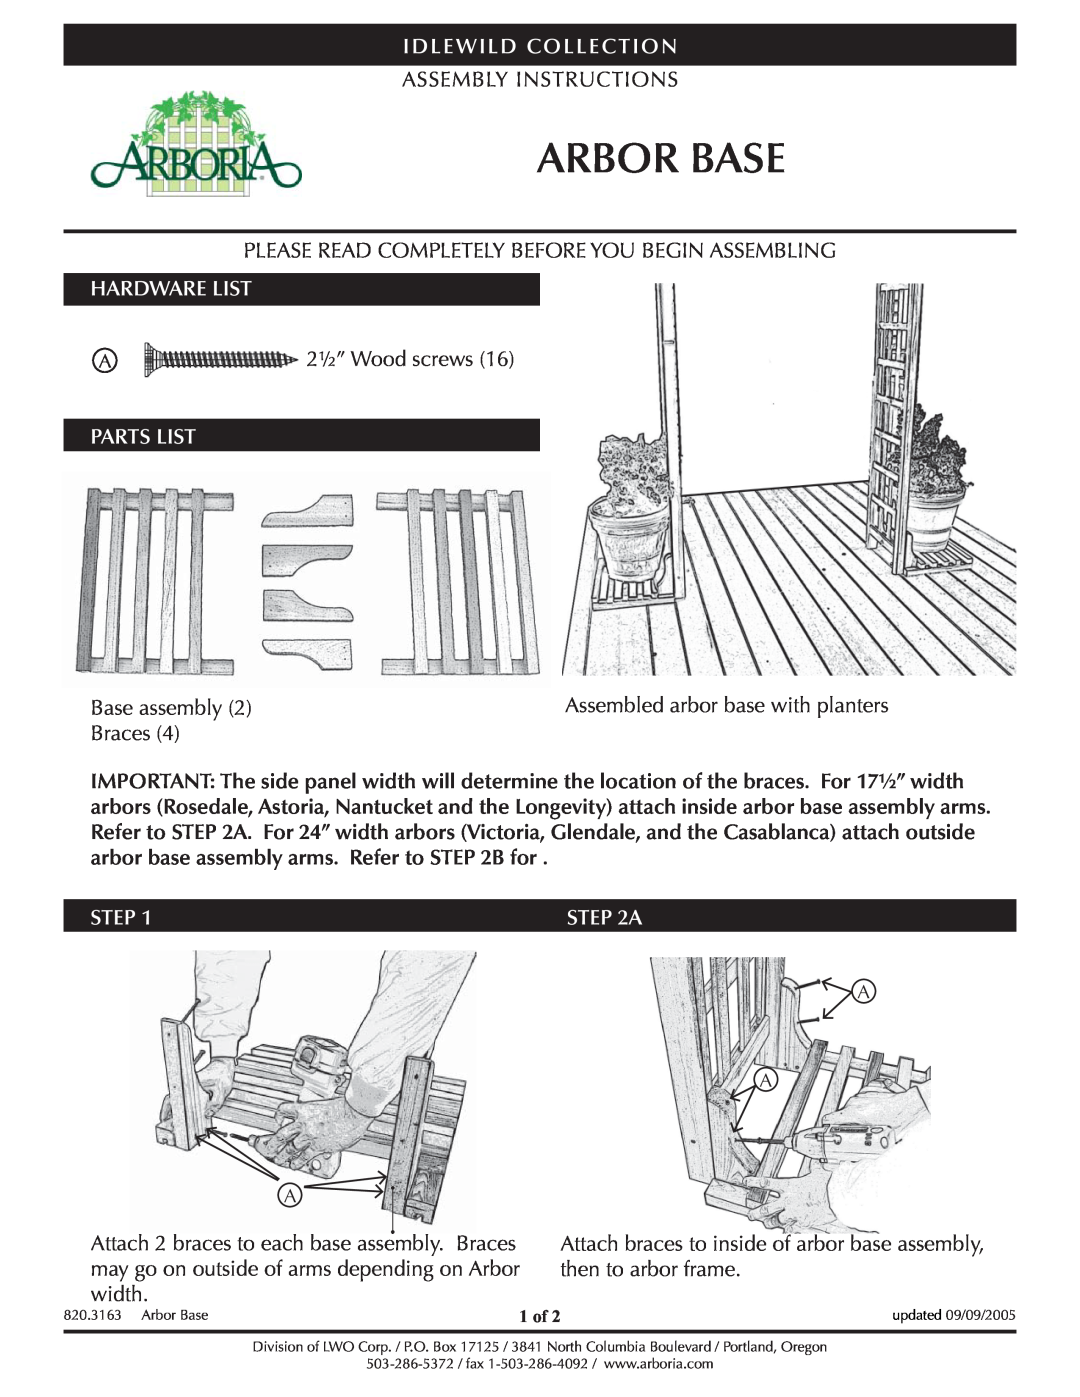 Arboria Arbor Base manual Idlewild Collection, Hardware List, Parts List, Step 